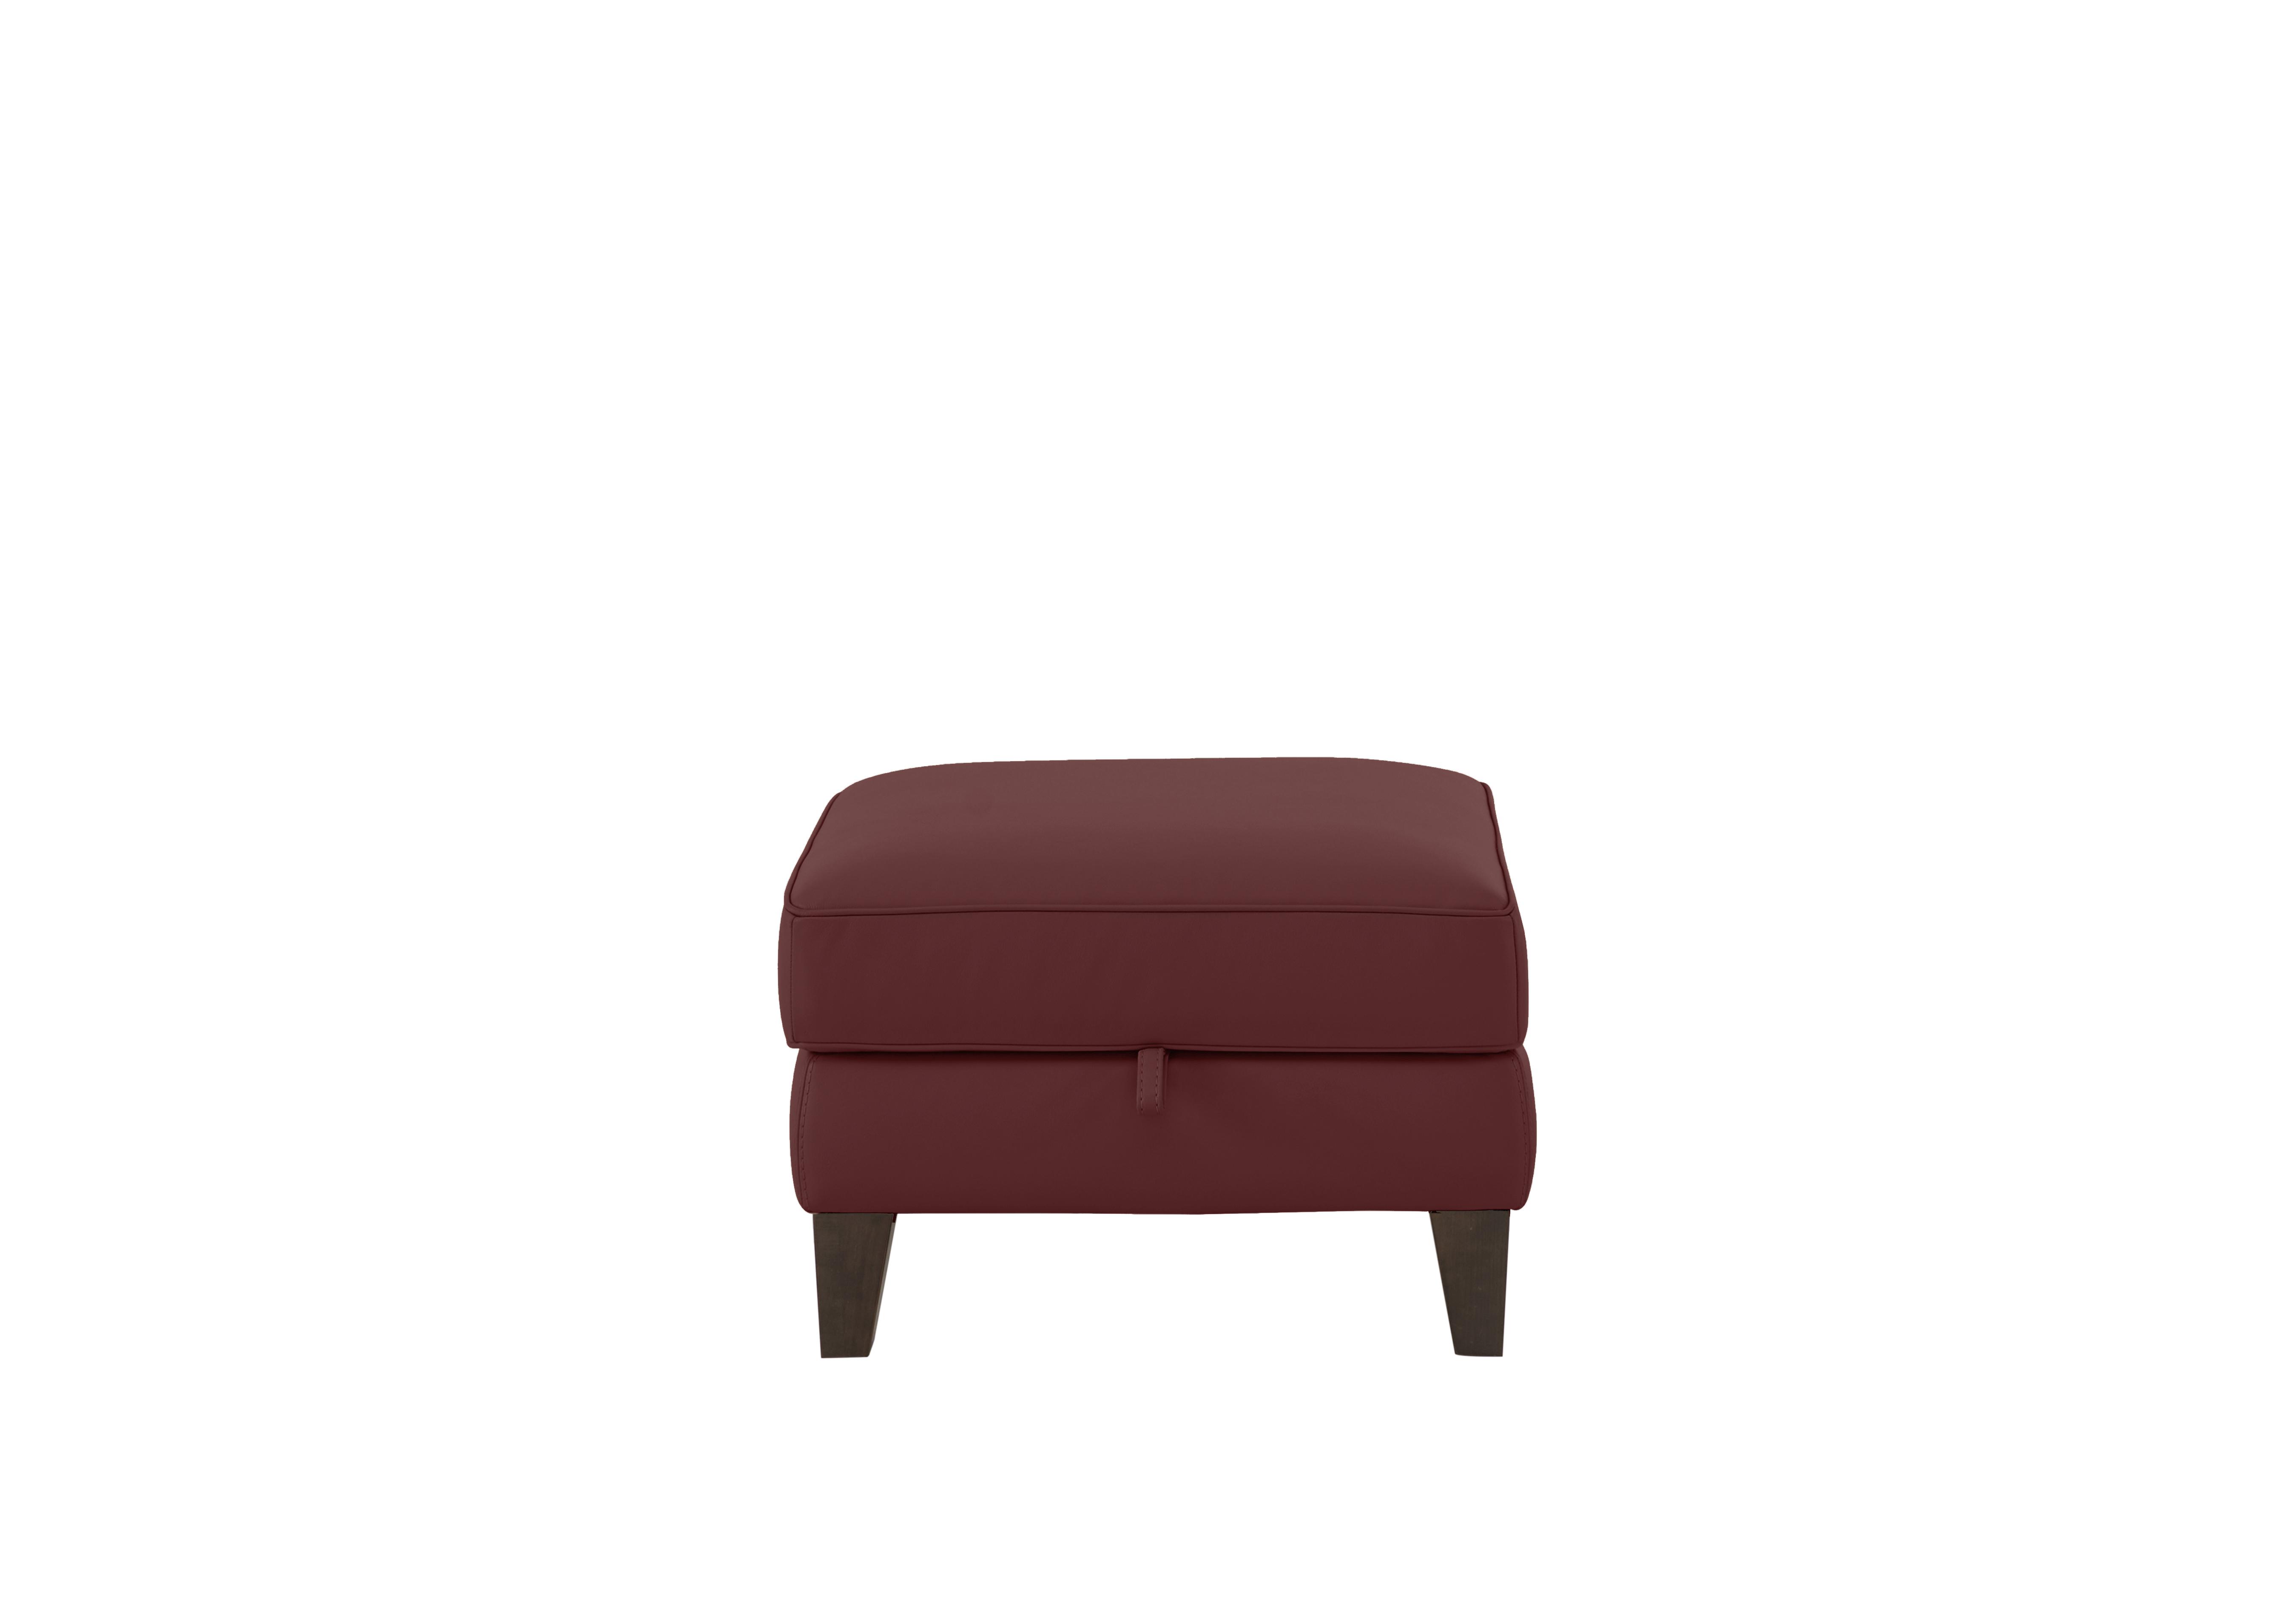 Brondby Leather Storage Footstool in Bv-035c Deep Red on Furniture Village